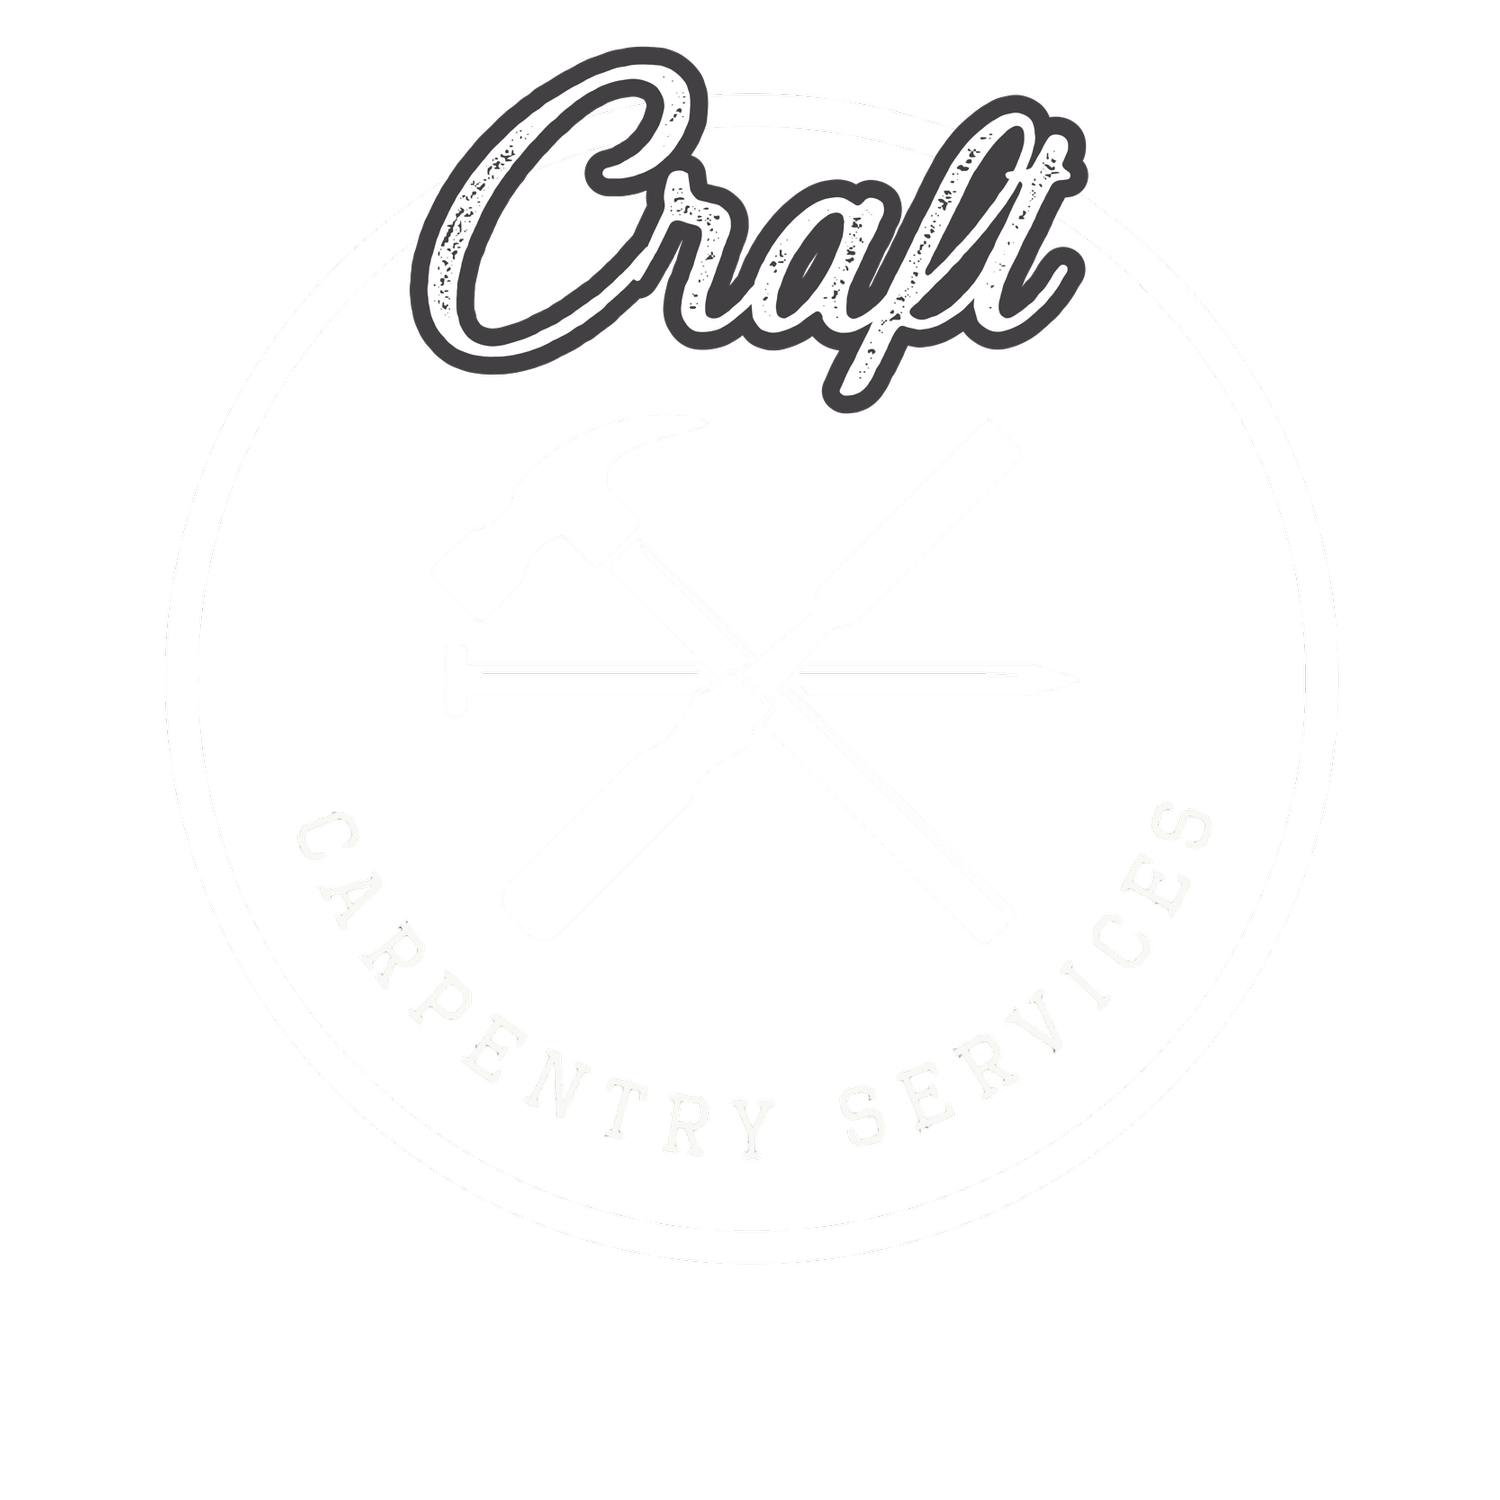 Craft Carpentry Services